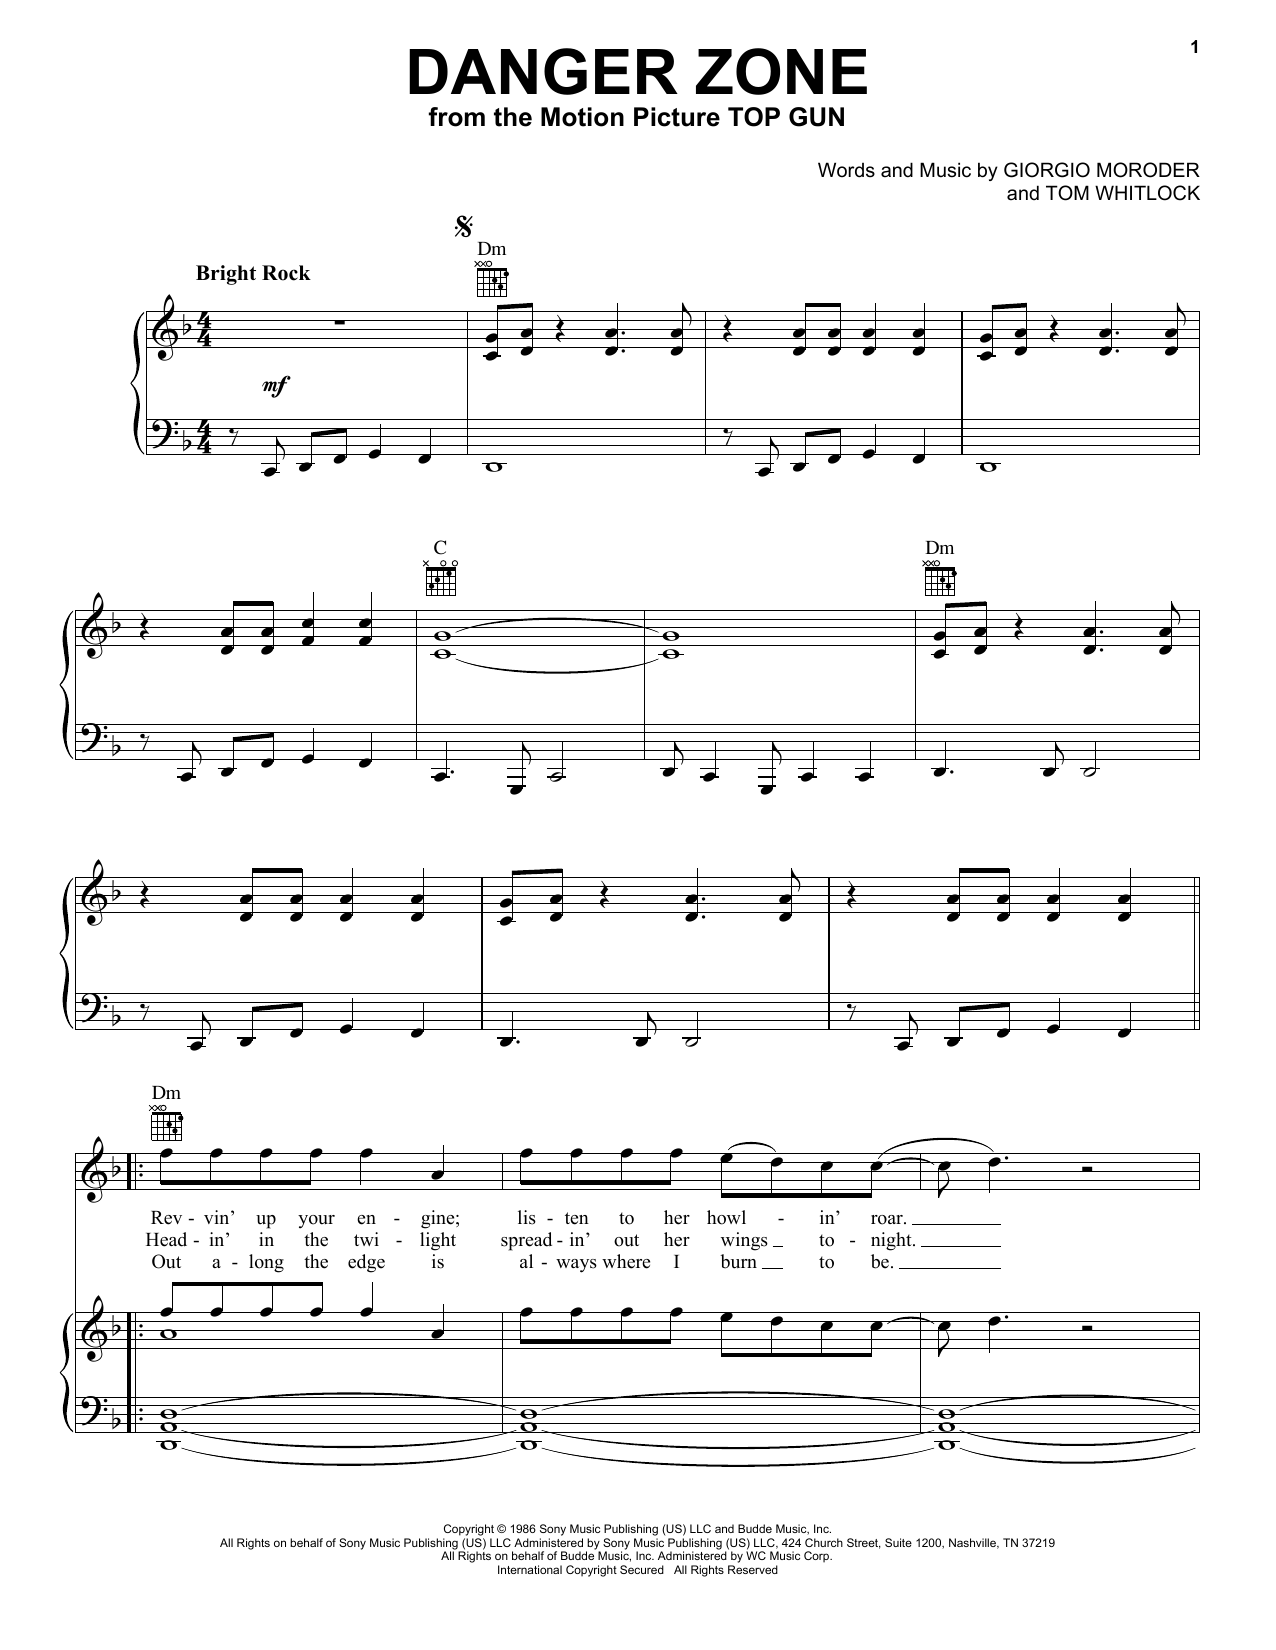 Kenny Loggins Danger Zone Sheet Music Notes & Chords for Trombone - Download or Print PDF